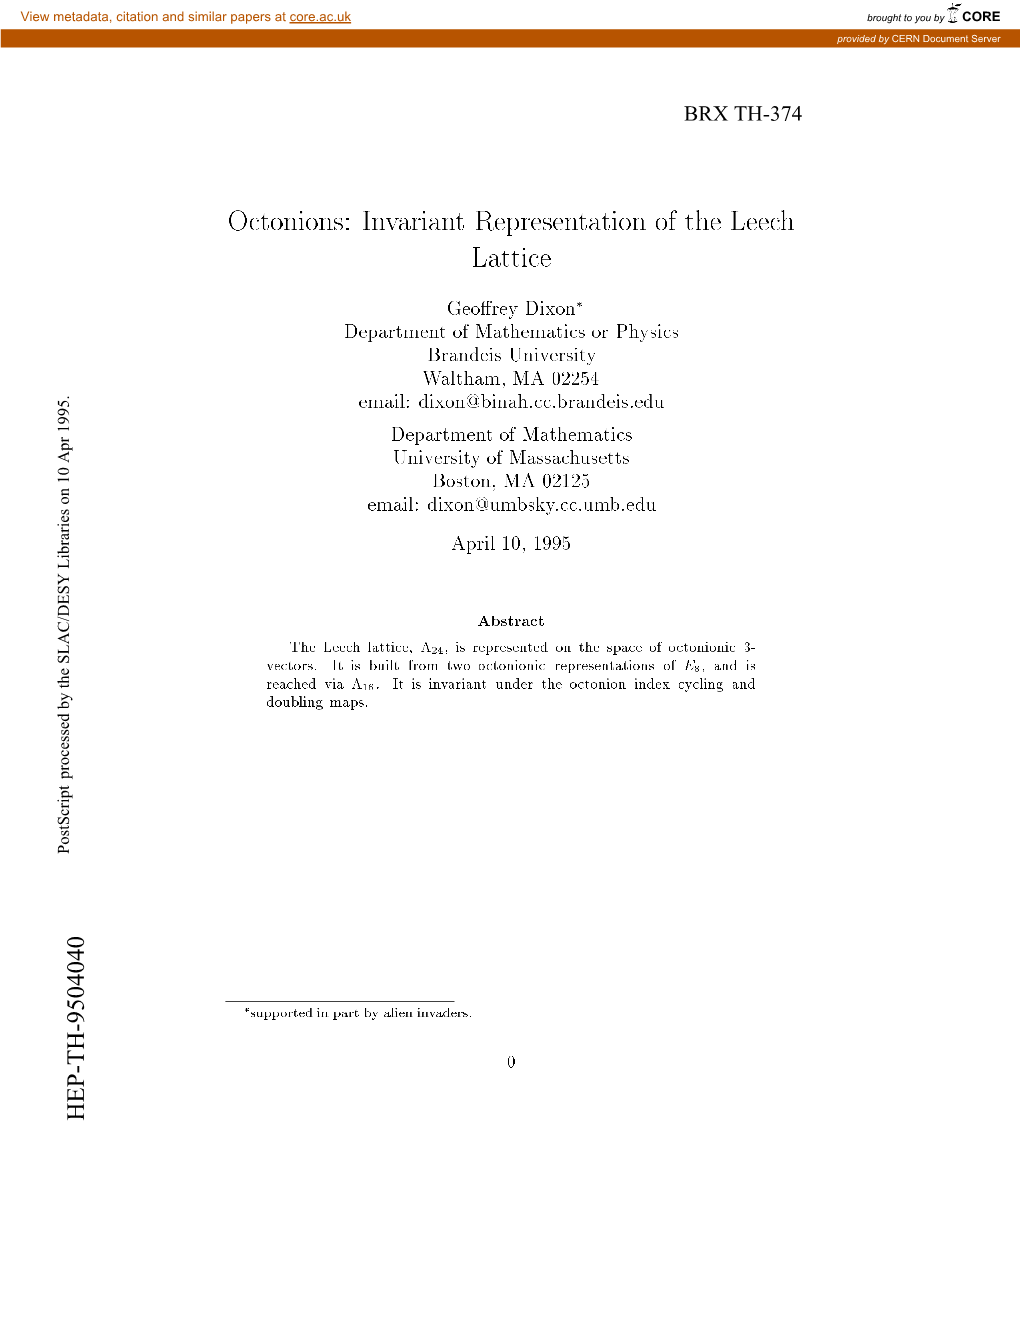 Octonions: Invariant Representation of the Leech Lattice